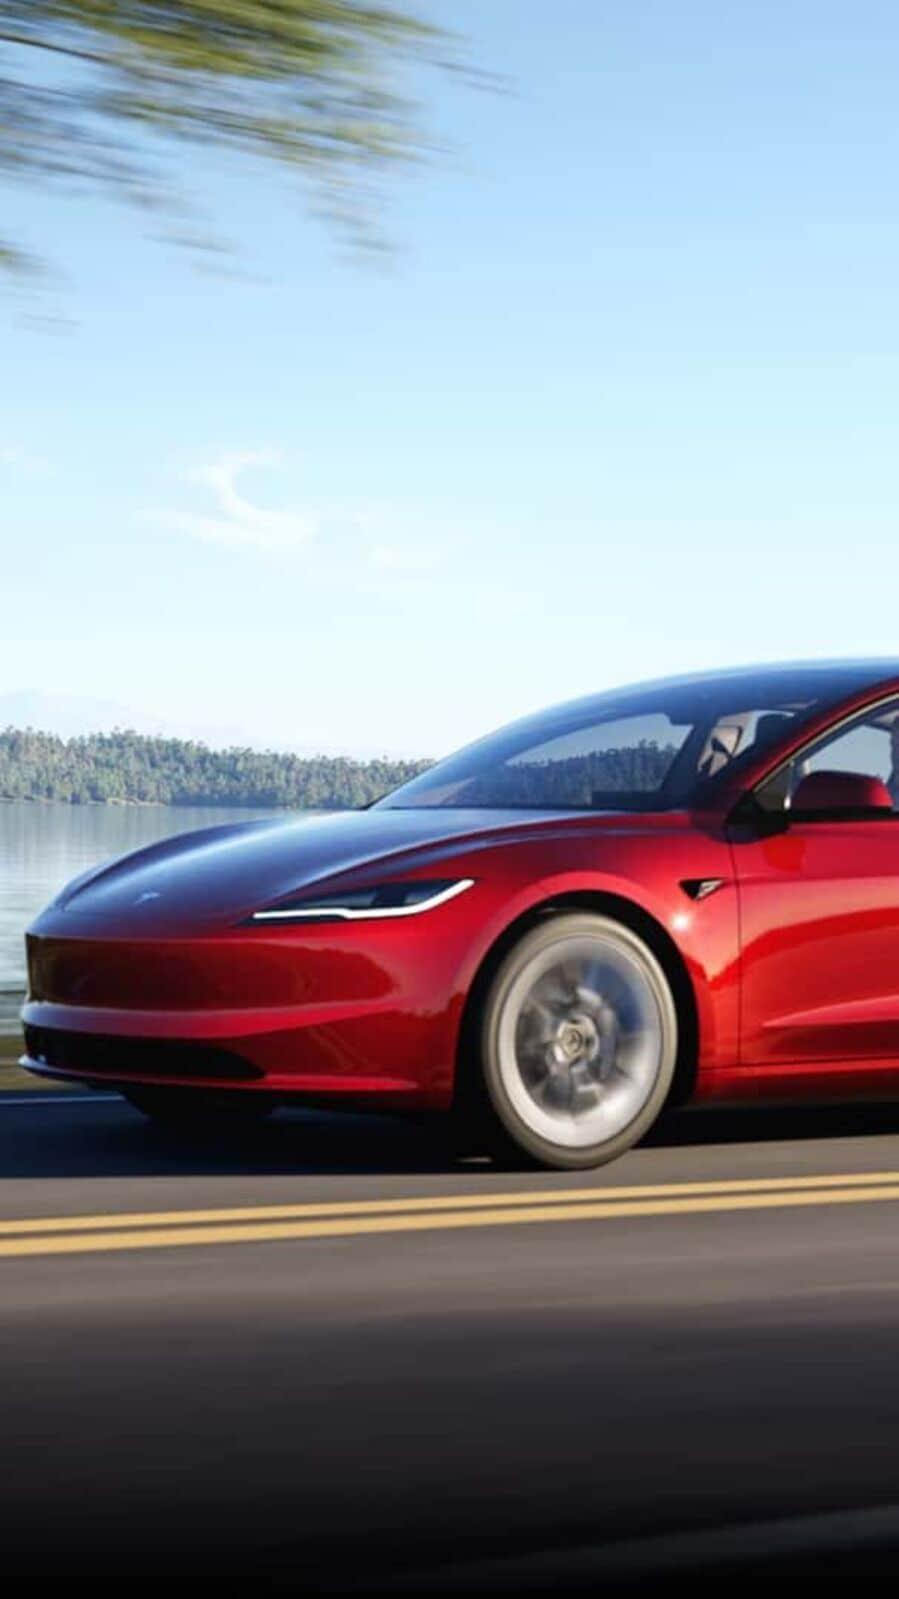 New Tesla Model Gets Chiselled Design And Km Range Ht Auto